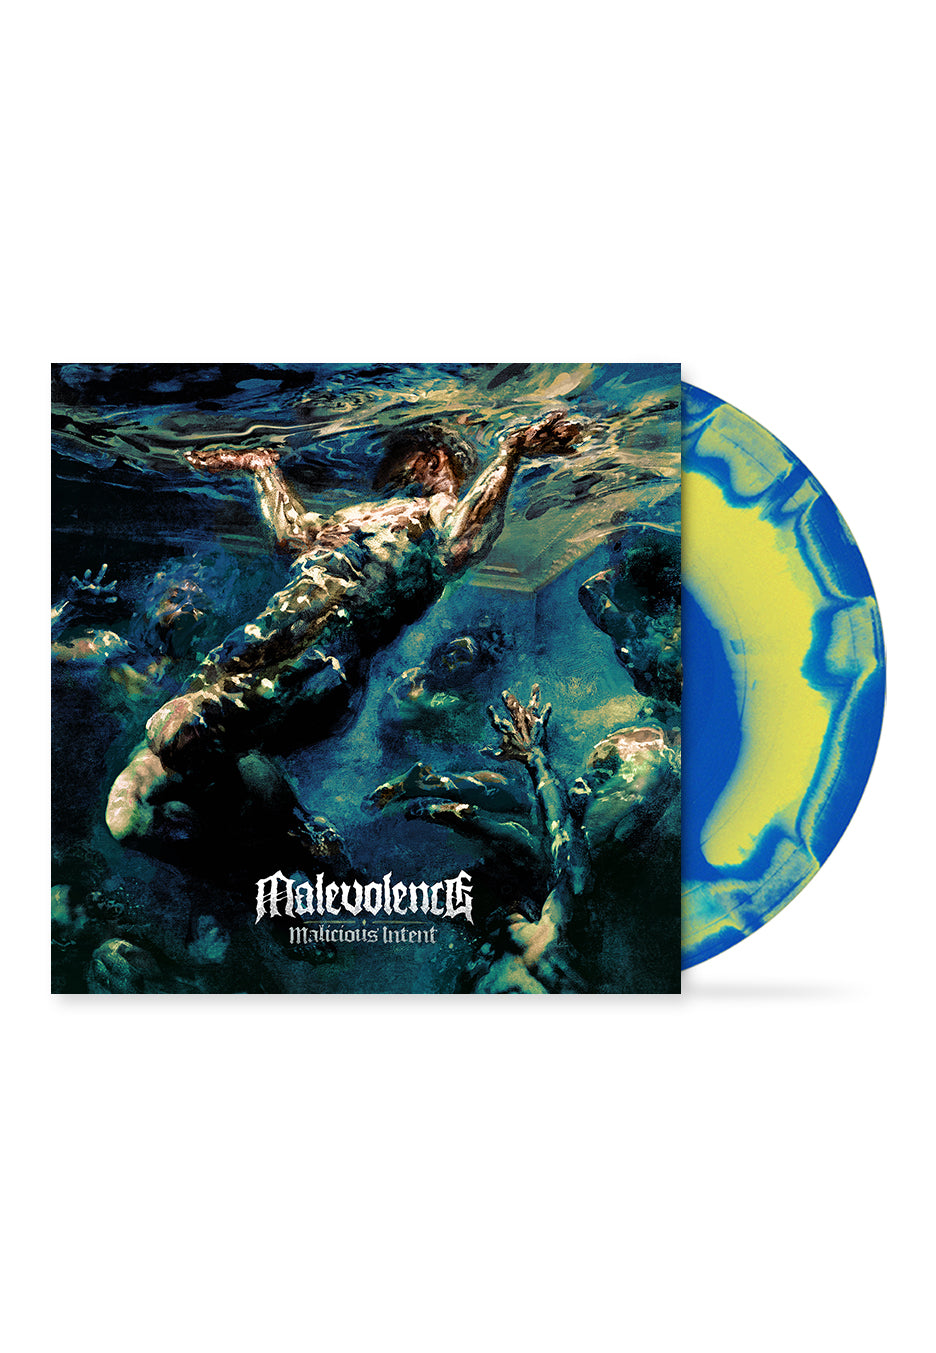 Malevolence - Malicious Intent Ltd. Yellow Blue Corona - Colored Vinyl